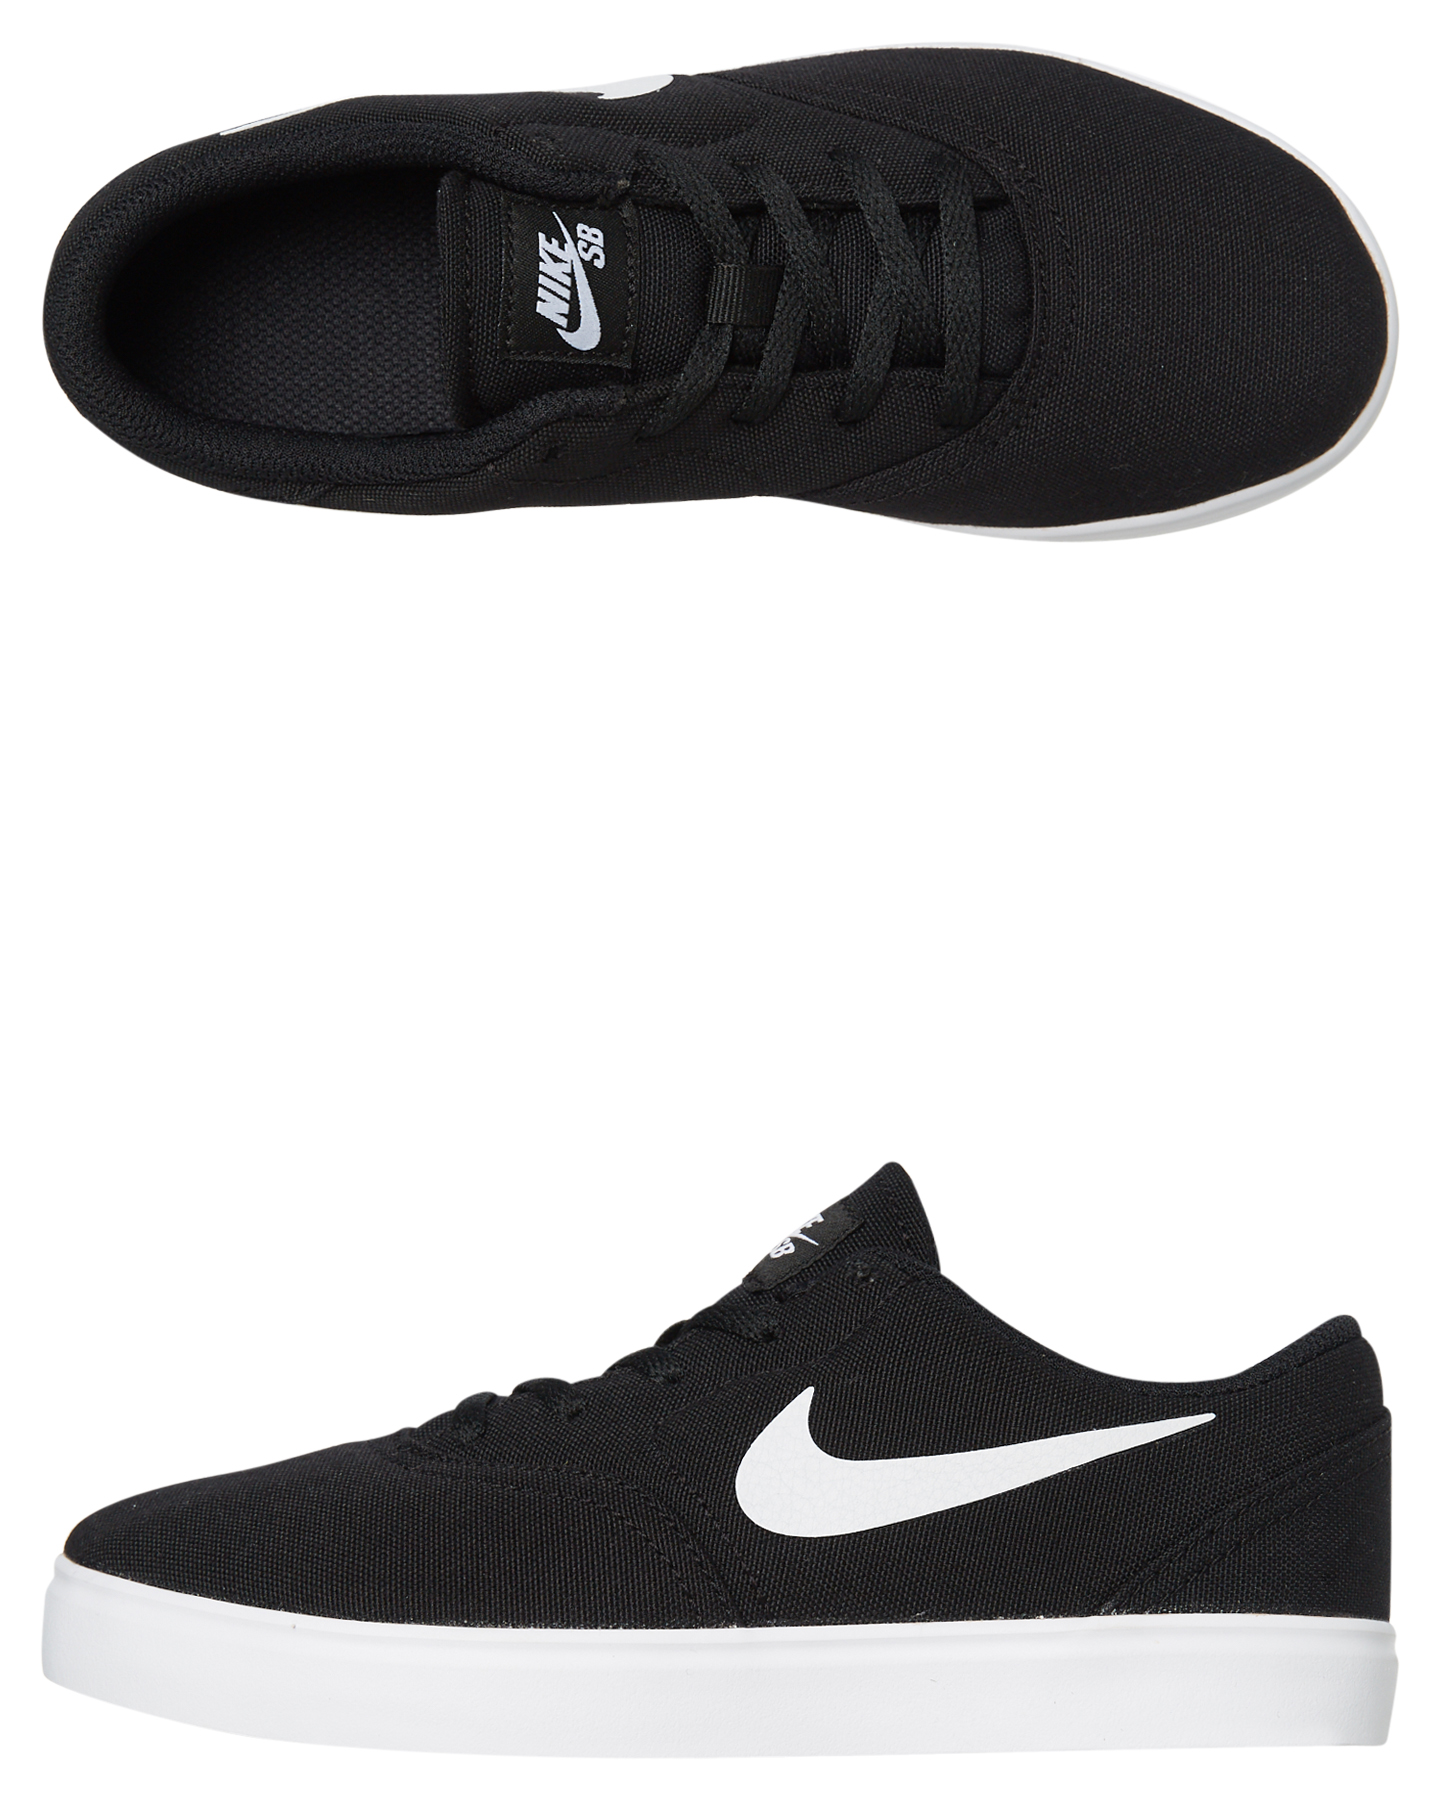 Nike Sb Check Canvas Shoe - Youth 